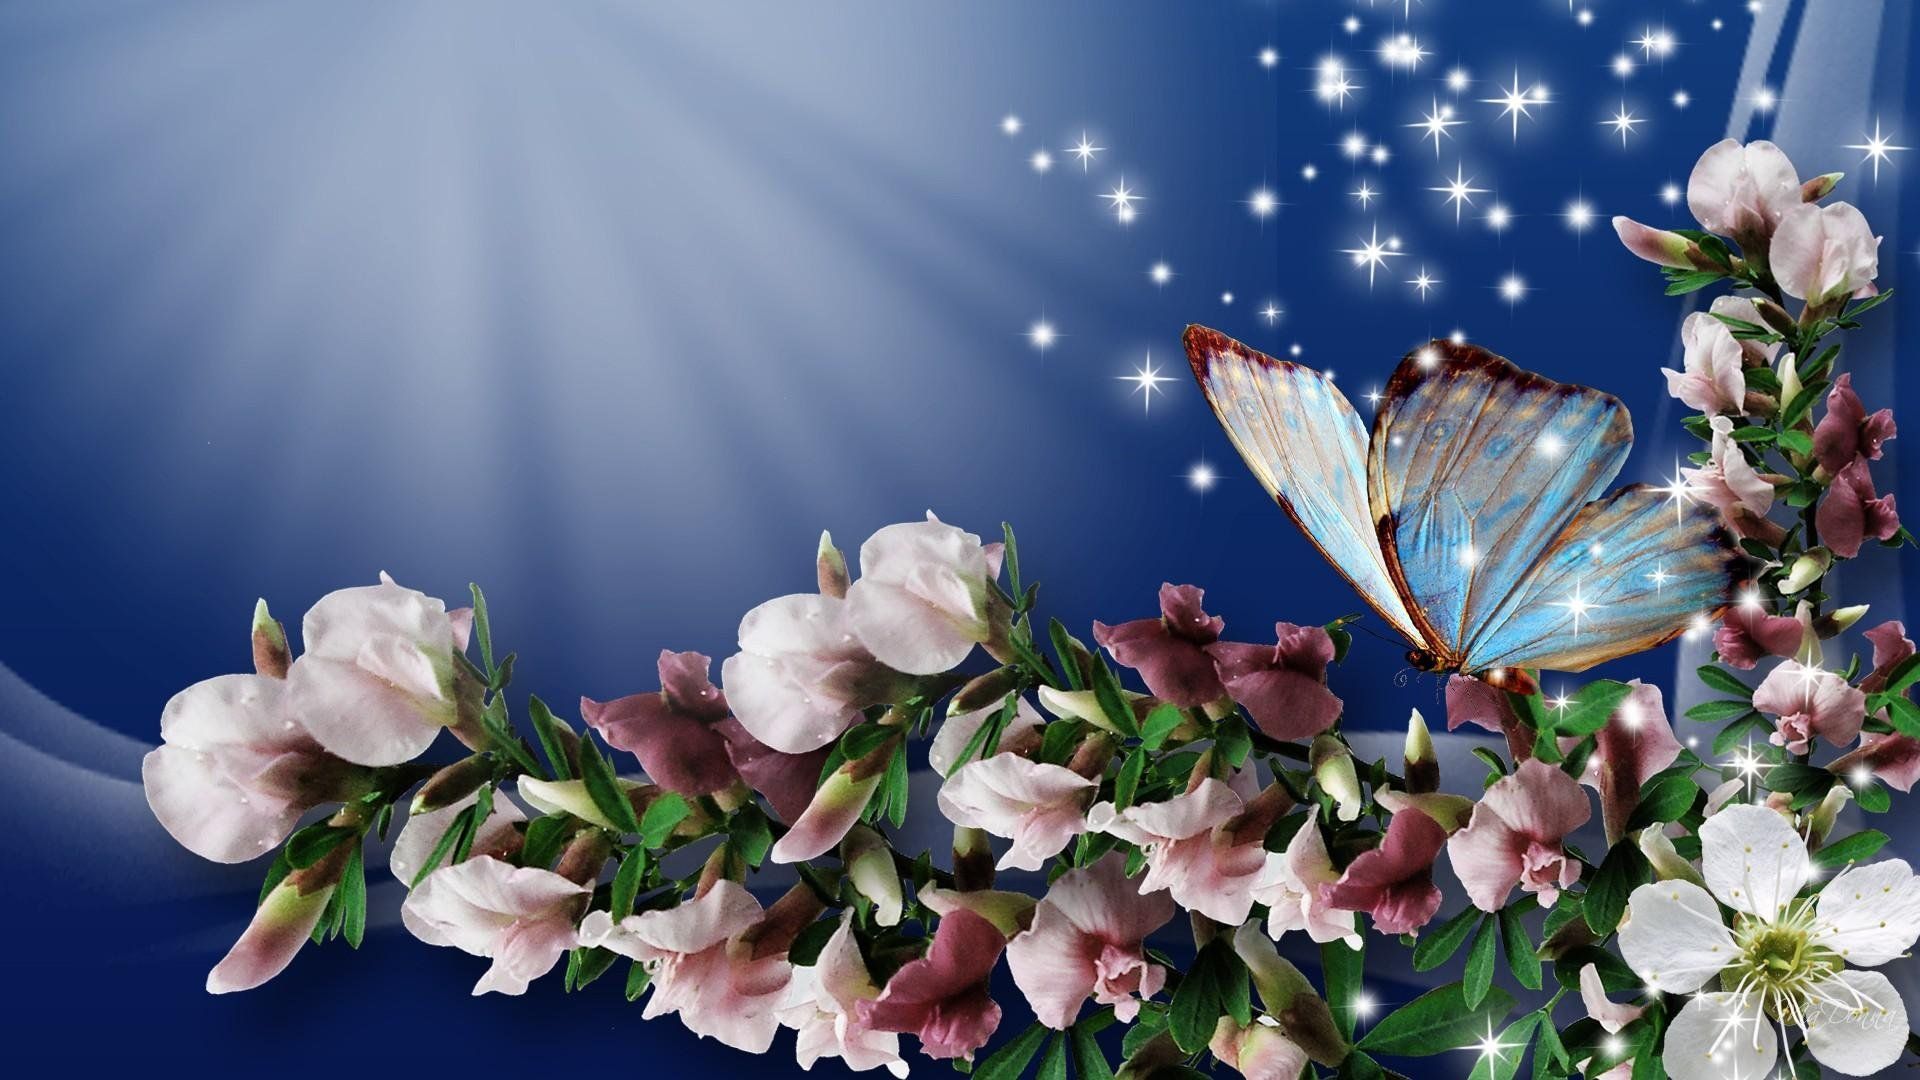 Spring Butterfly HD Desktop Backgrounds 7755 - HD Wallpapers Site